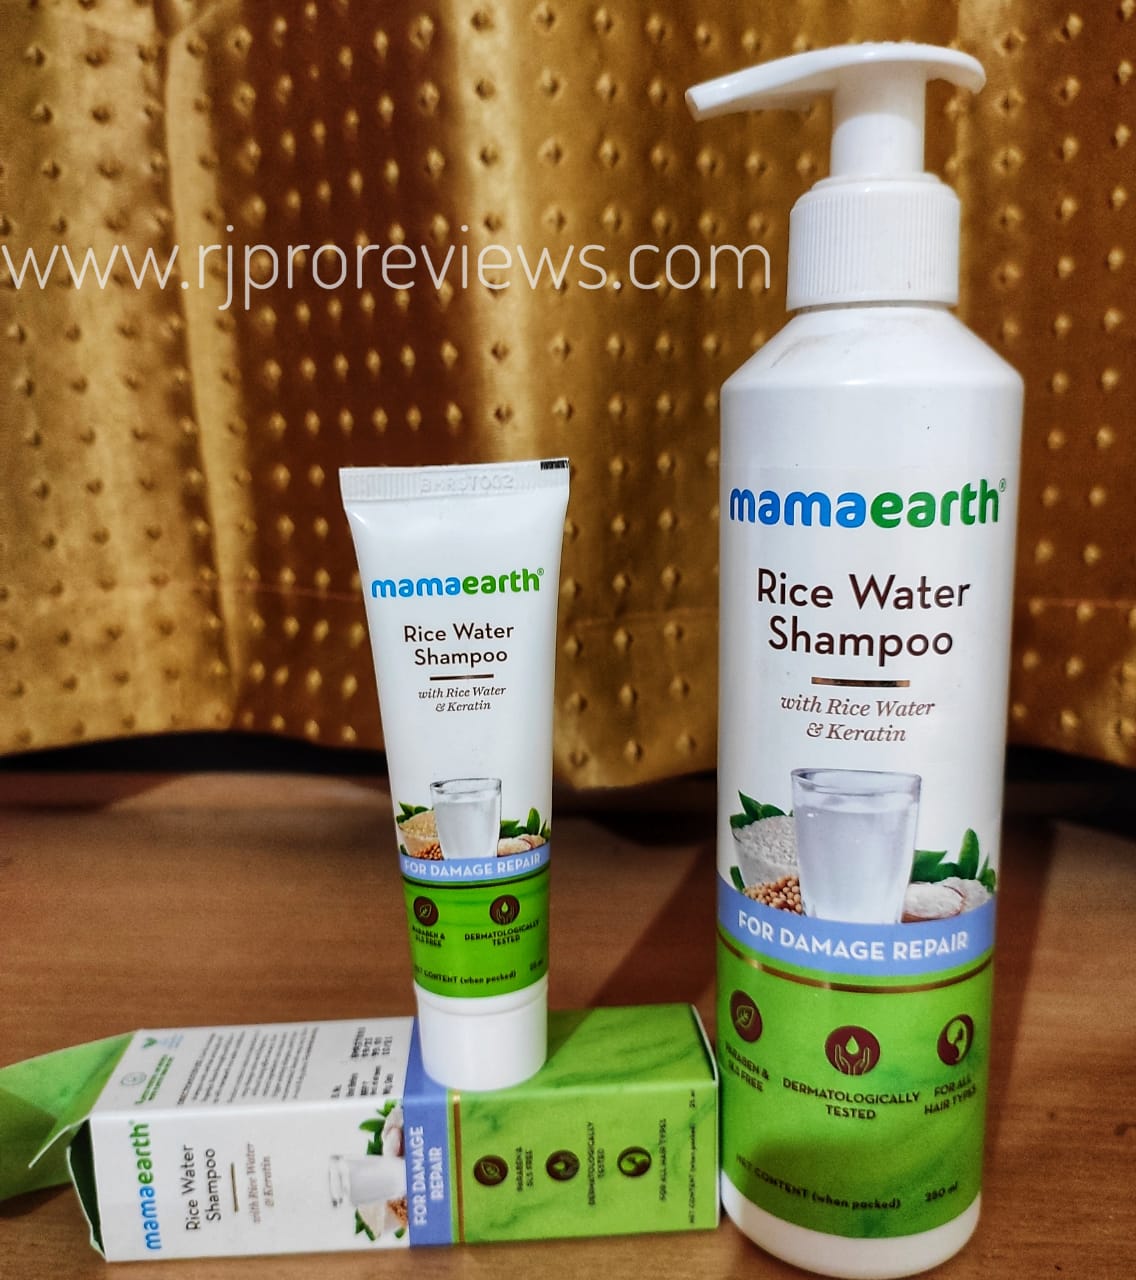 Mamaearth Rice Water Shampoo Review - RJ PRO REVIEWS